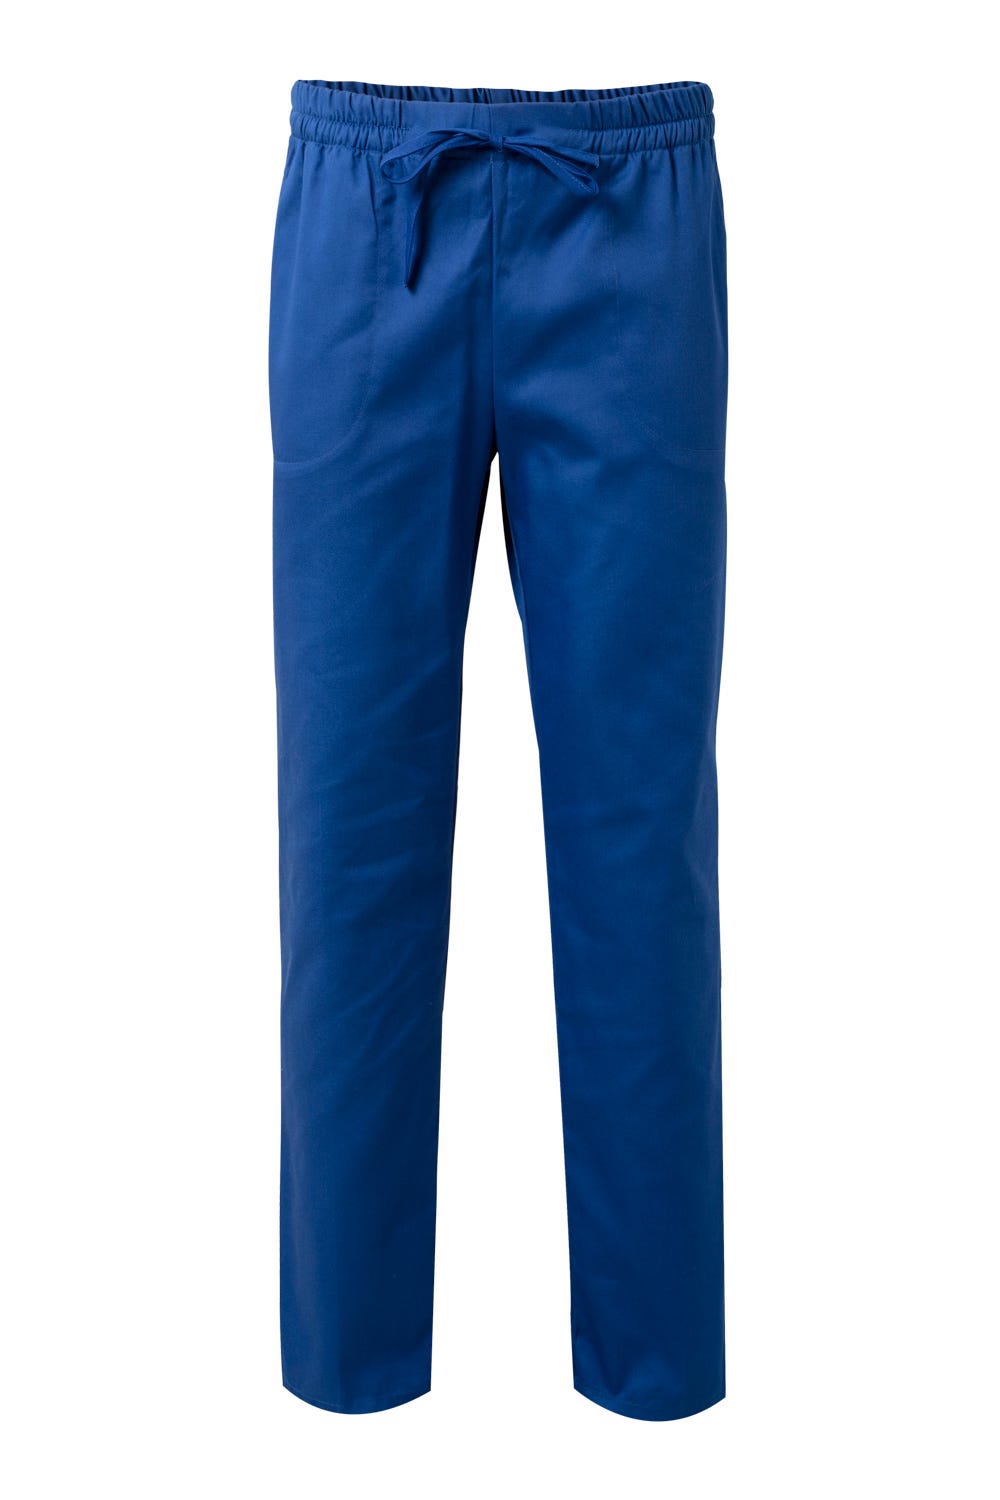 Pantalón pijama mujer 319-1 azul marino VELILLA - Ferretería Campollano